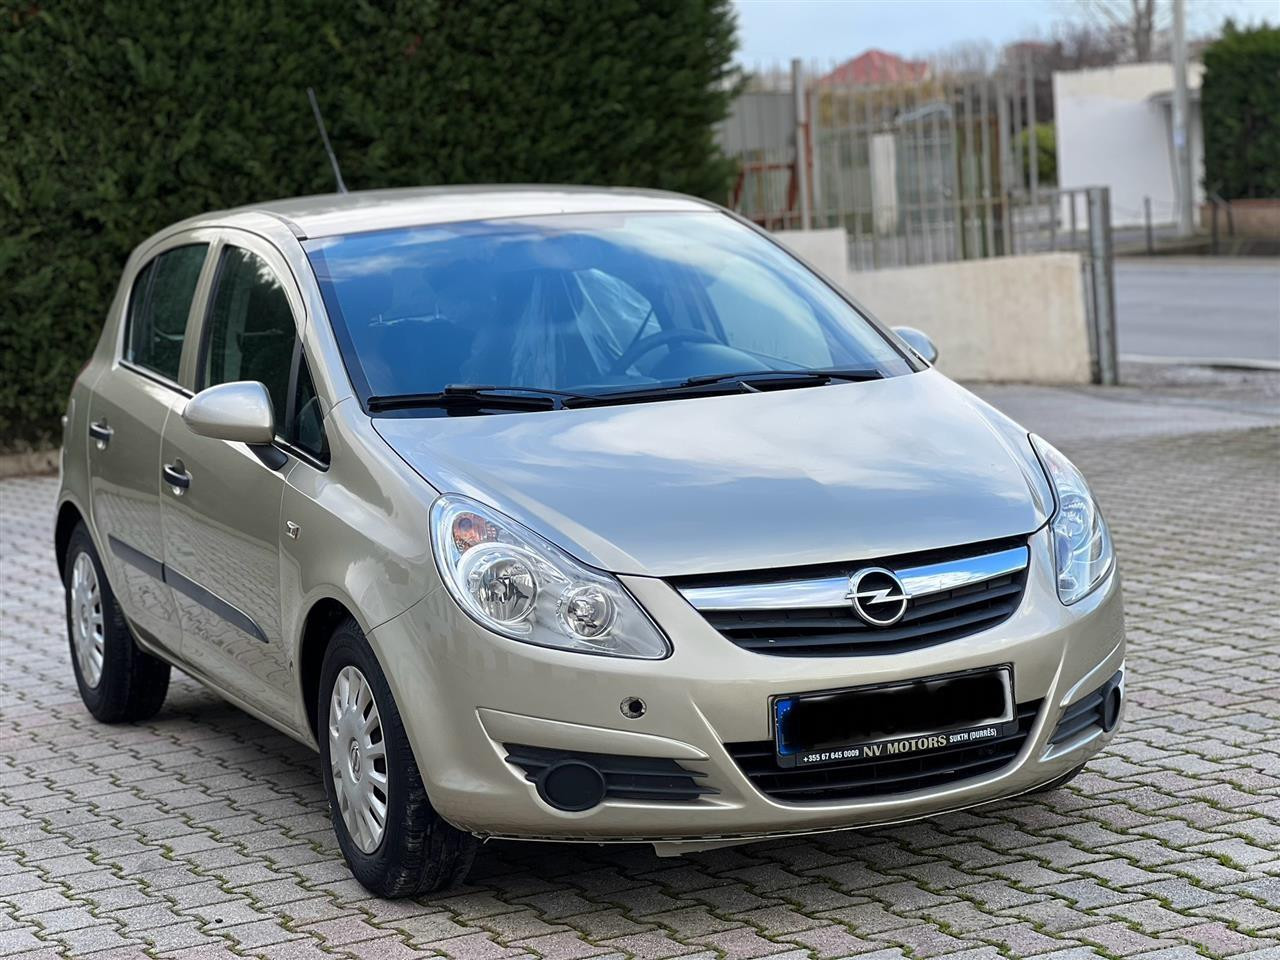 Opel Corsa 1.2 benzin Automat  2008 113 mij km sapoardhur